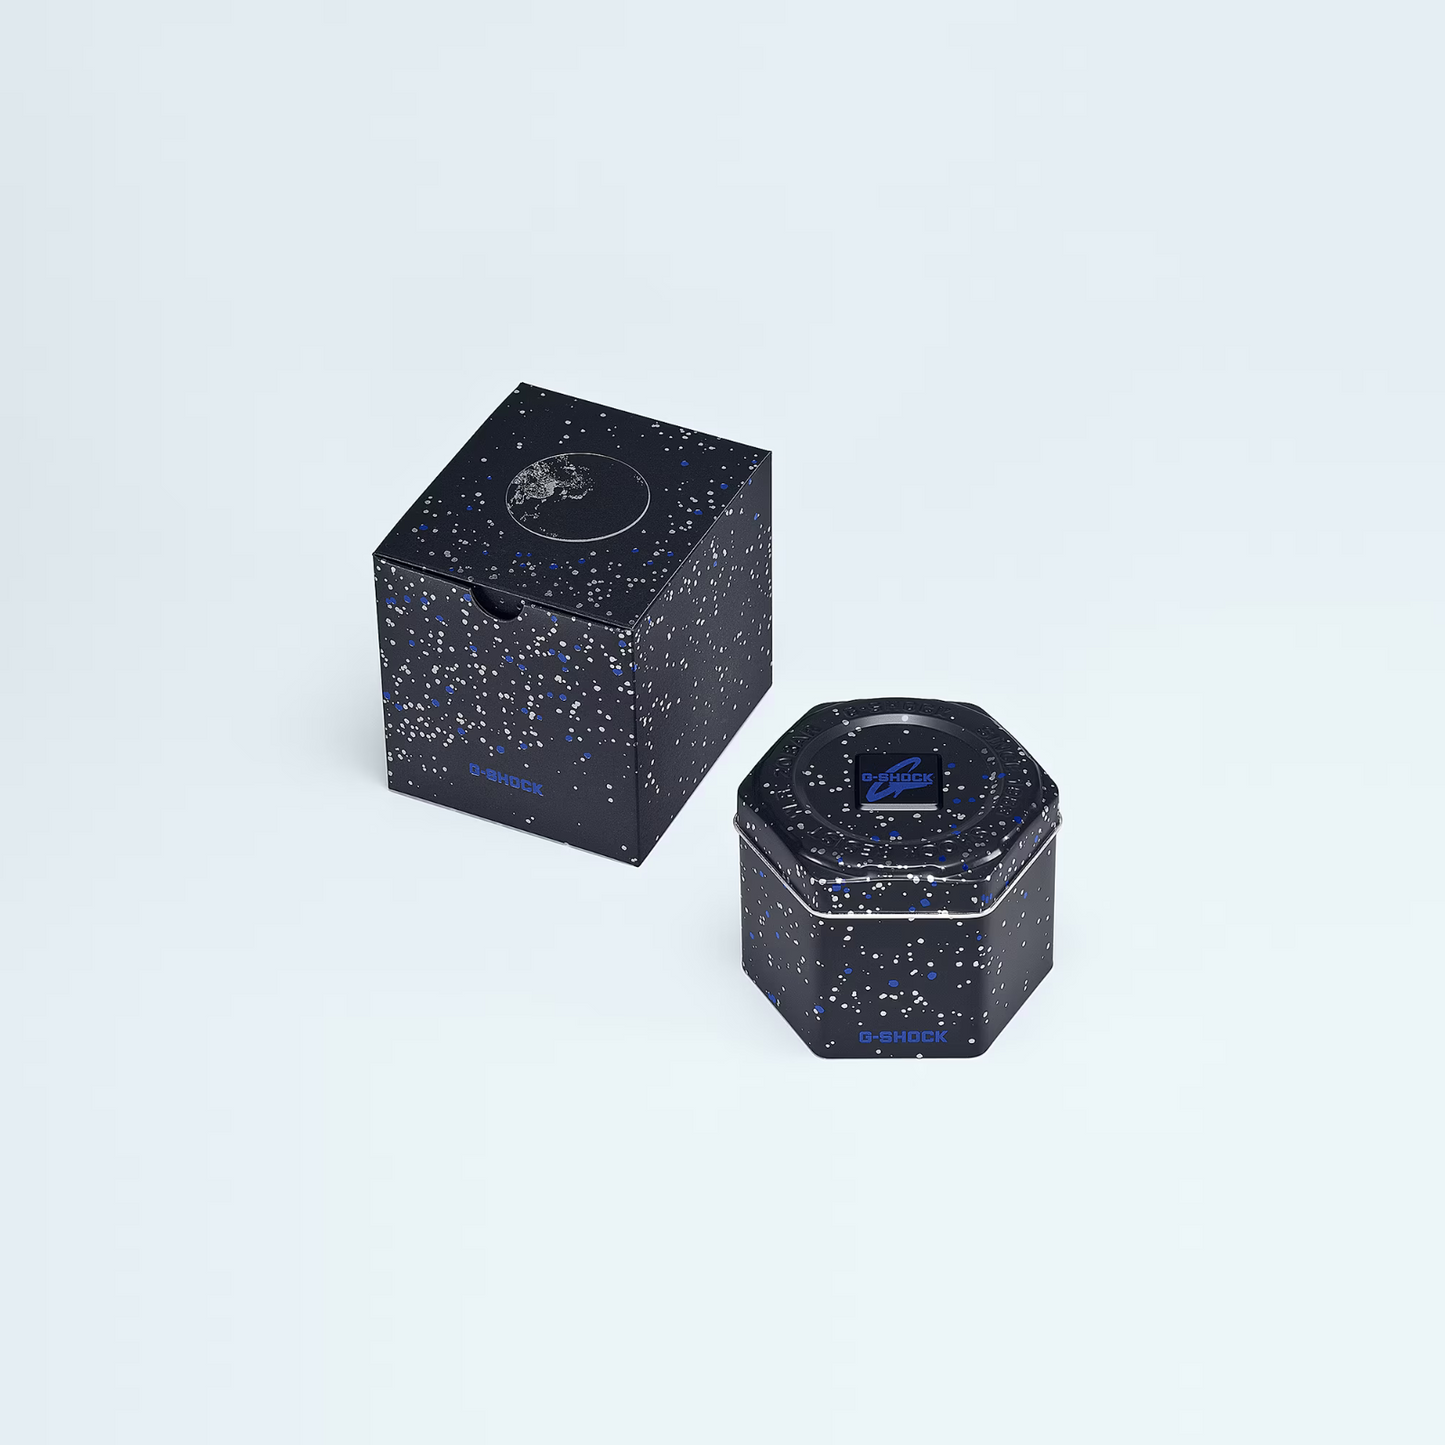 Casio G-Shock Analog Digital Limiter Earth Resin SS Watch GM-110EARTH-1